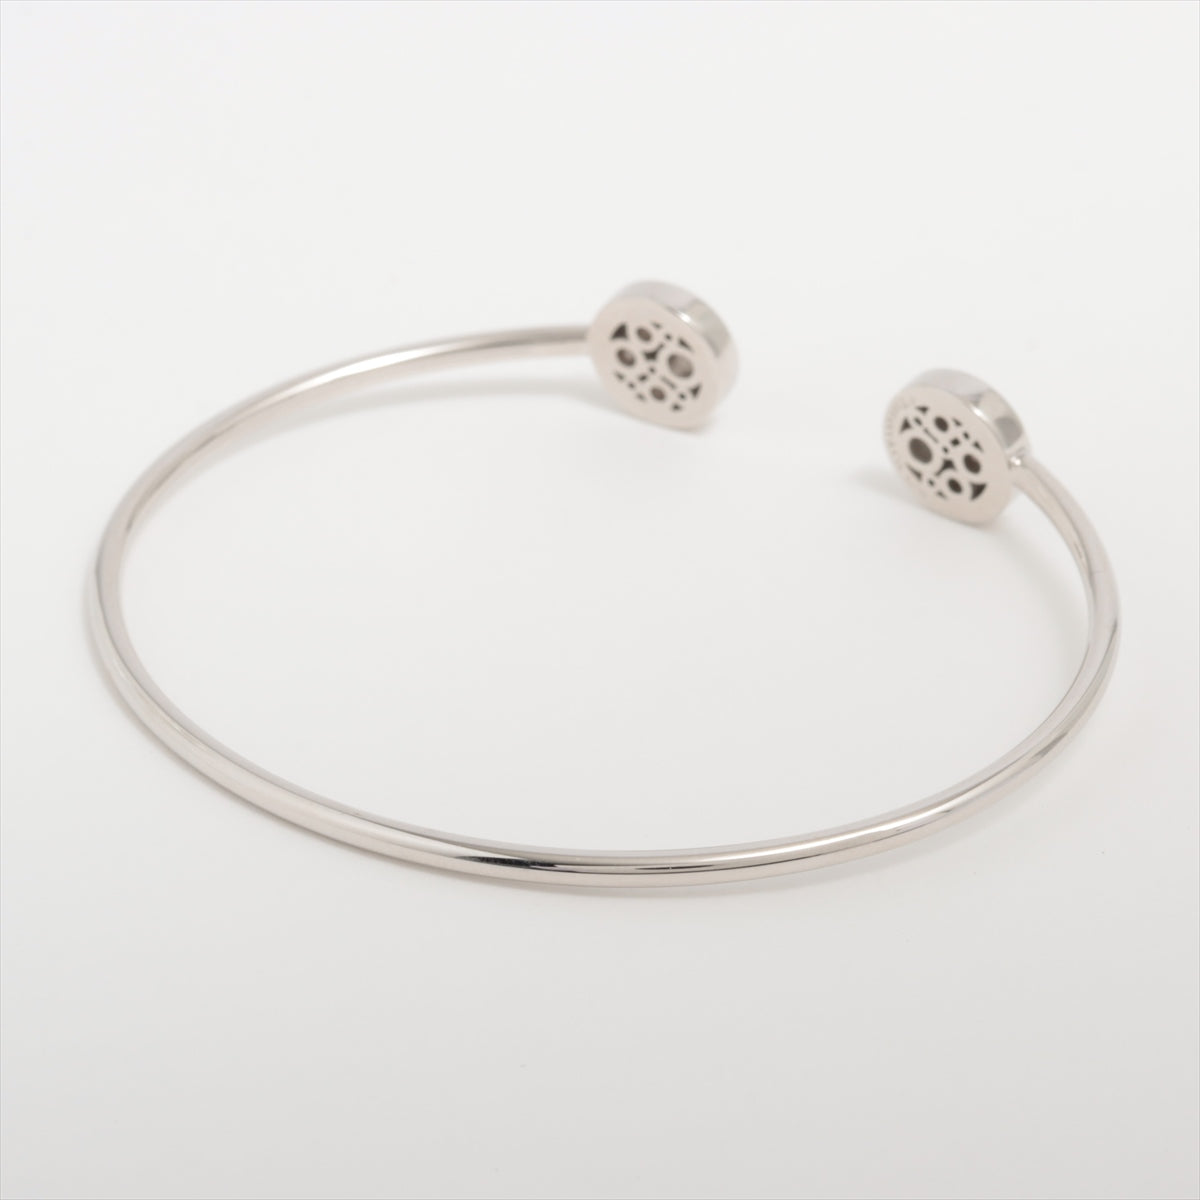 Tiffany Cobblestone diamond Bracelet 750(WG) 7.0g